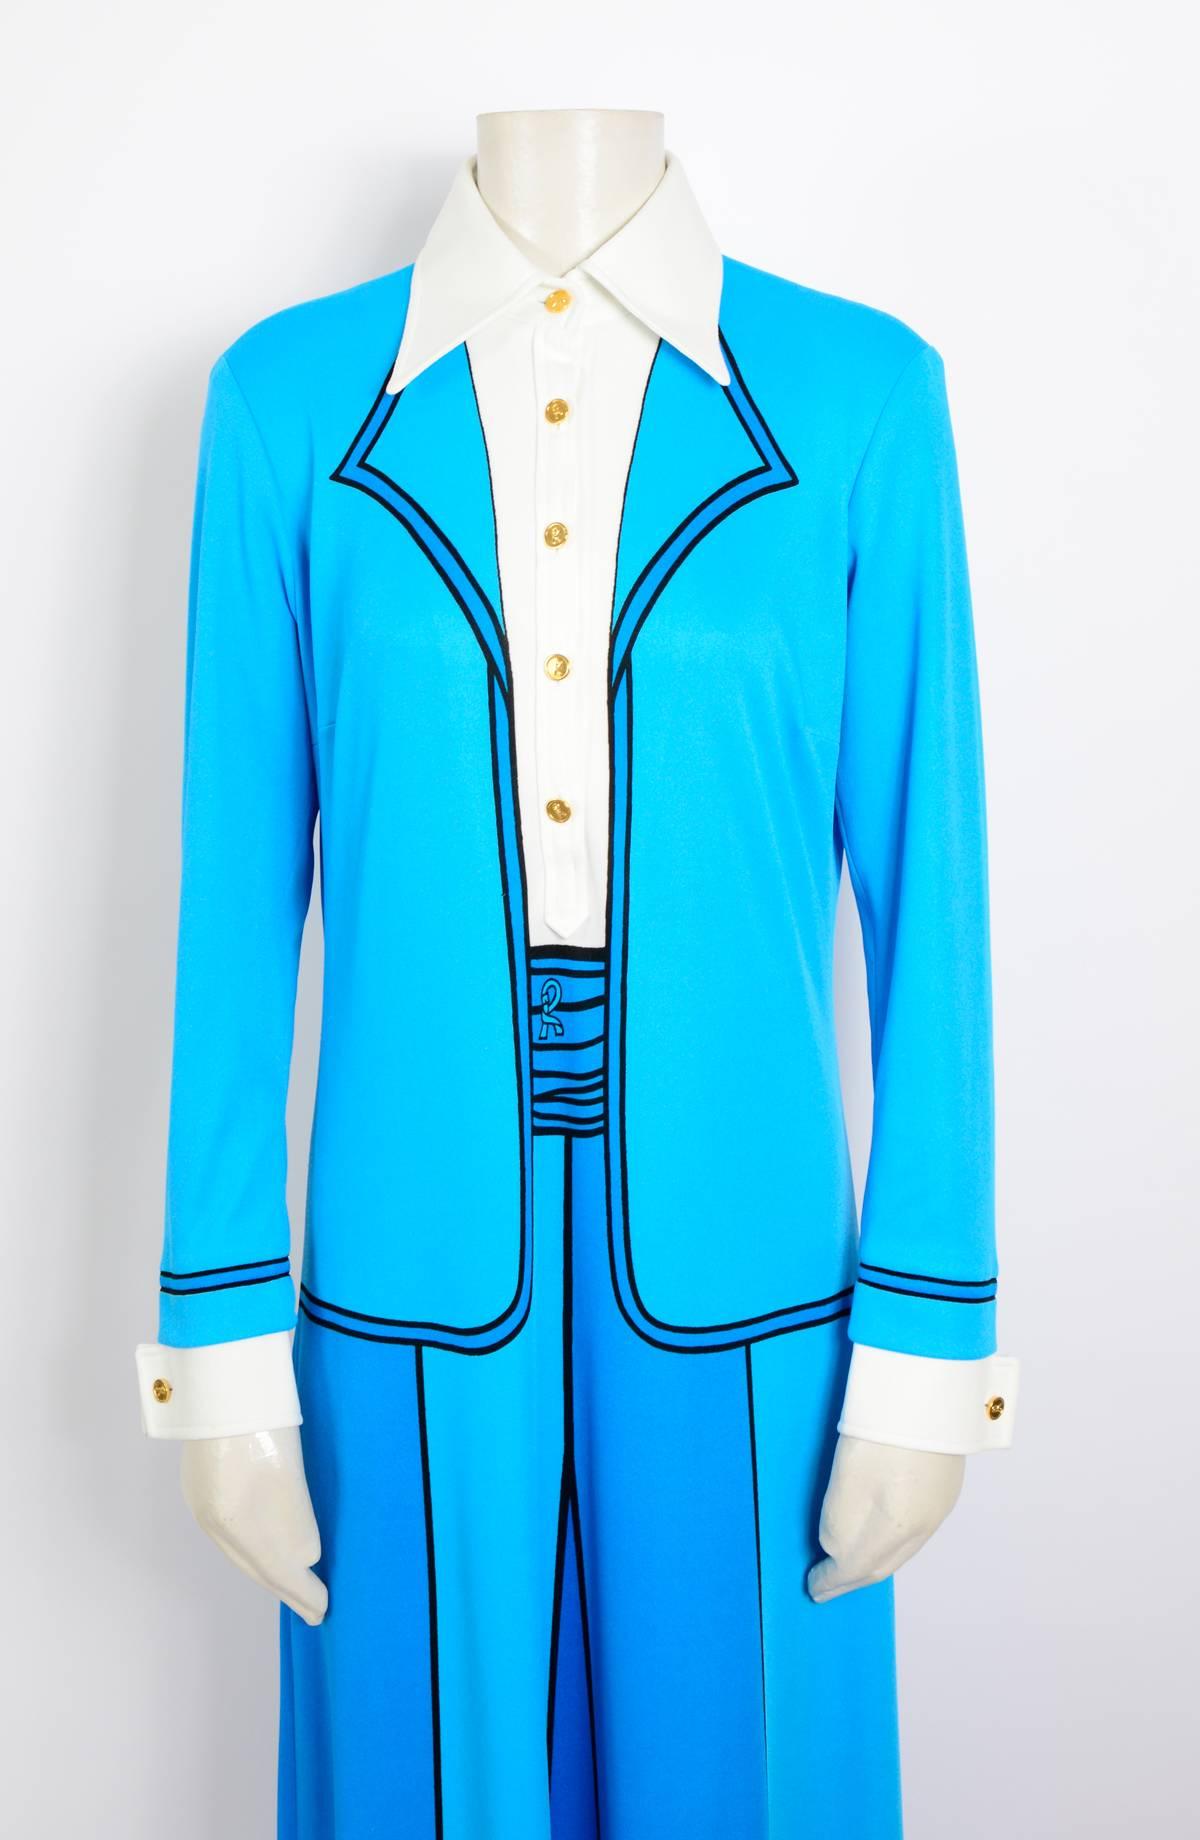 Women's Roberta di Camerino vintage bleu trompe l'oeil jersey dress